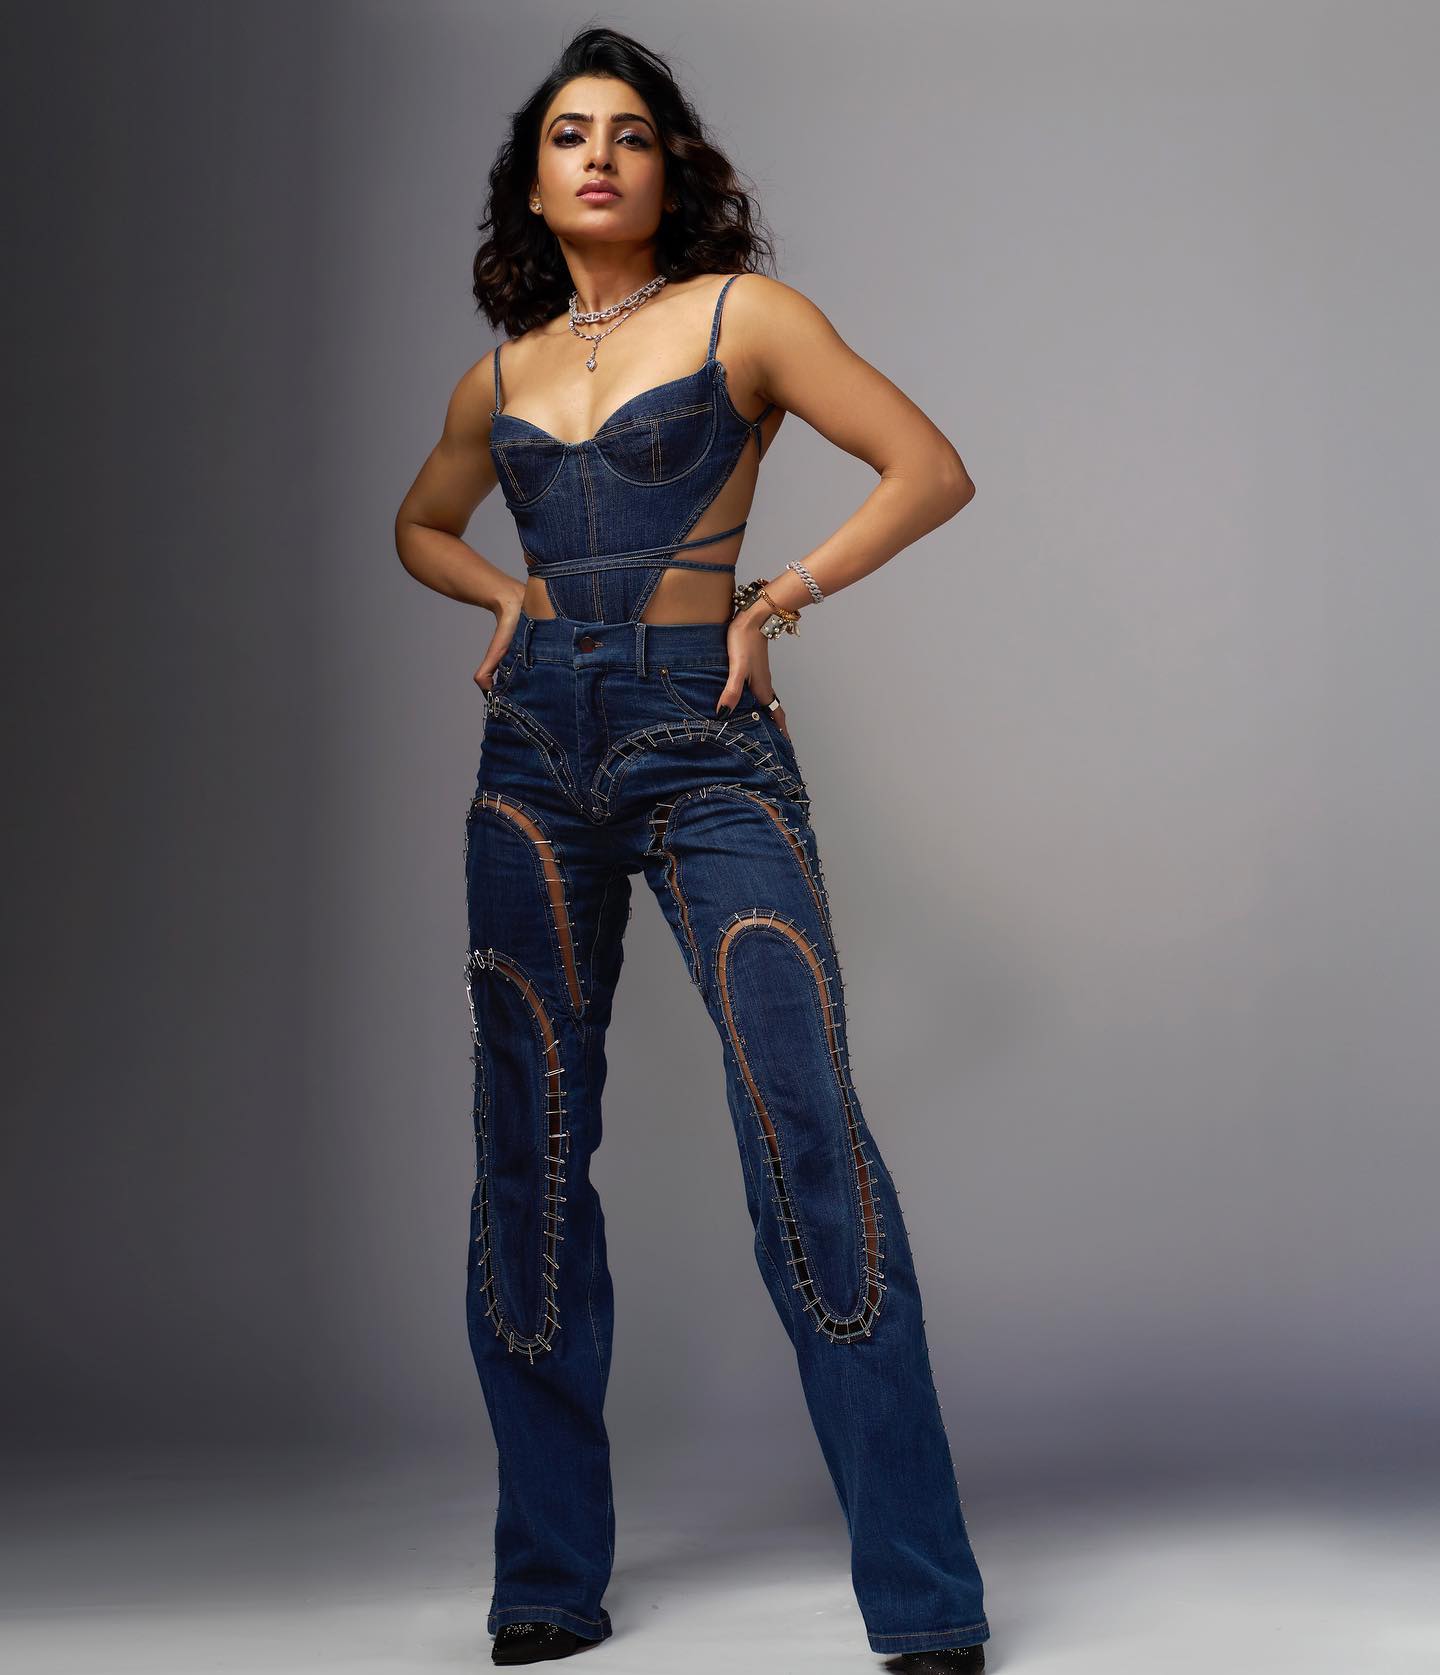 Samantha Ruth Prabhu wears Denim jumpsuit on MTV Hustle